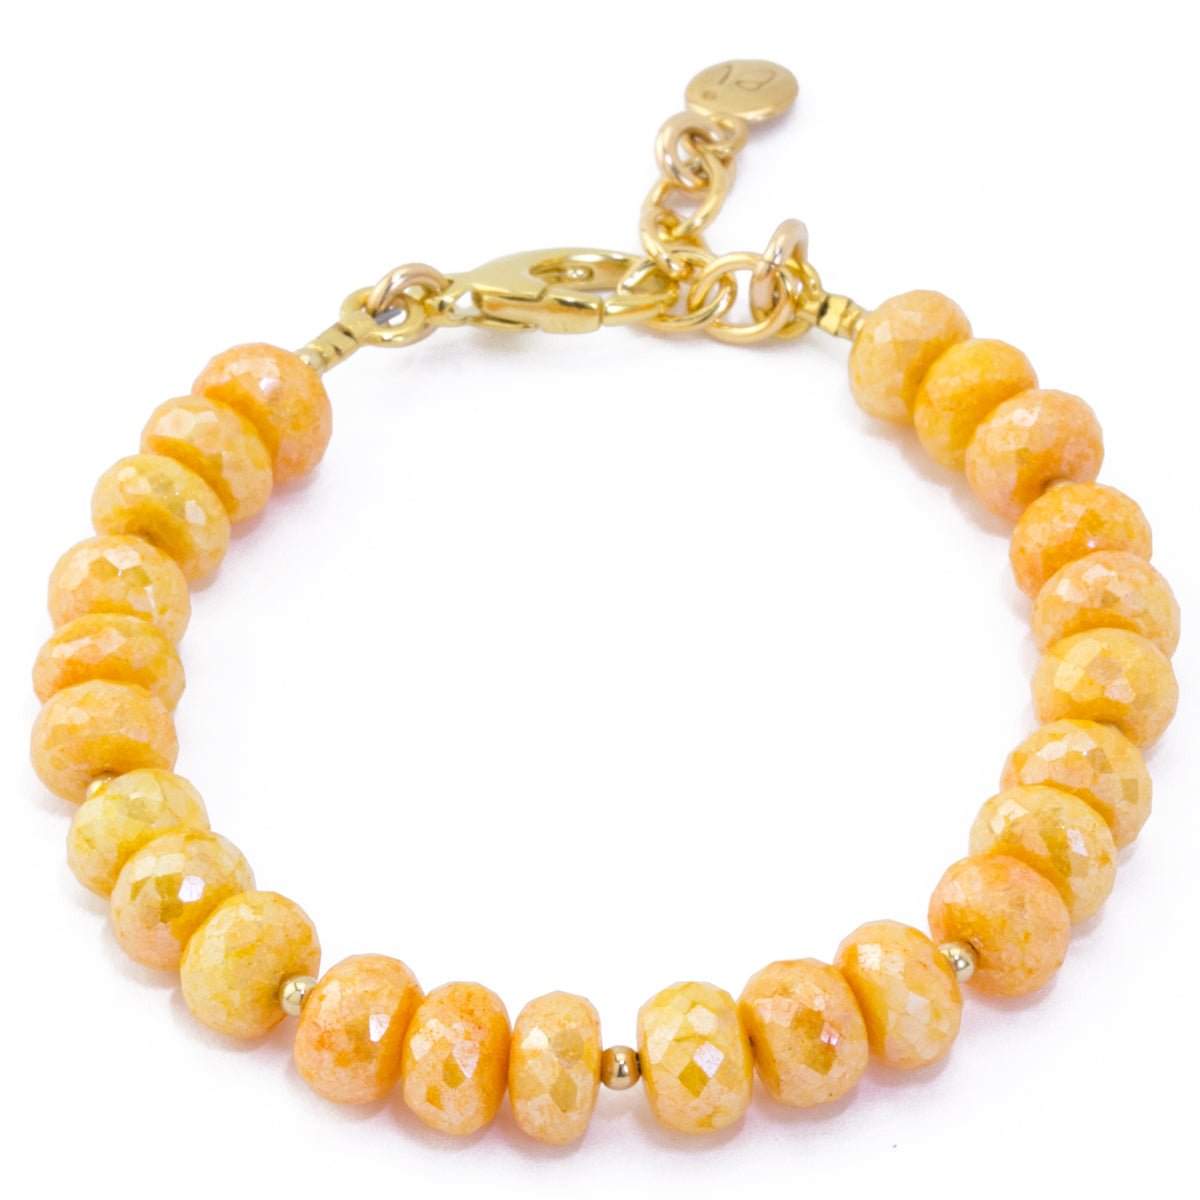 The Goddess Collection Orange Coated Quartz Bracelet